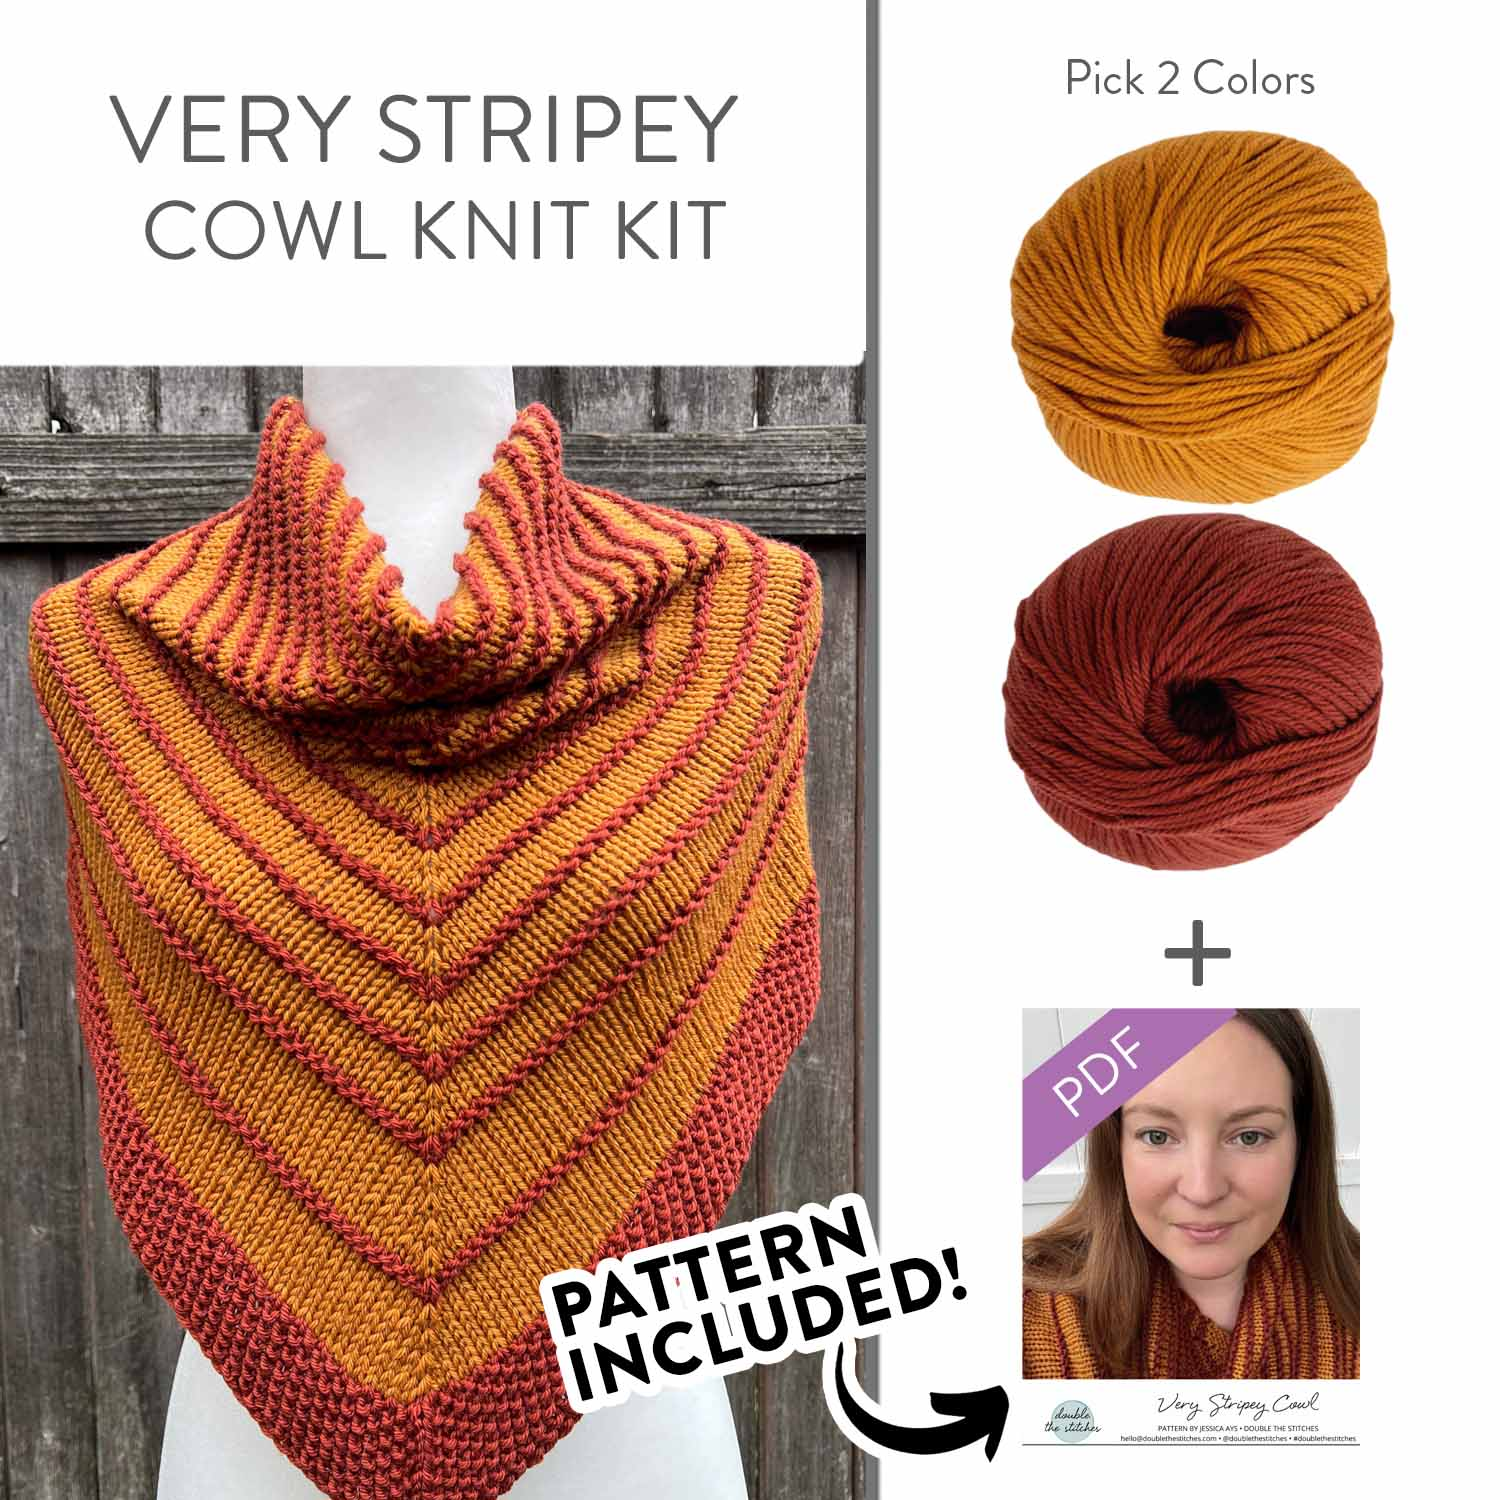 Very Stripey Cowl Knit Kit - Twice Sheared Sheep